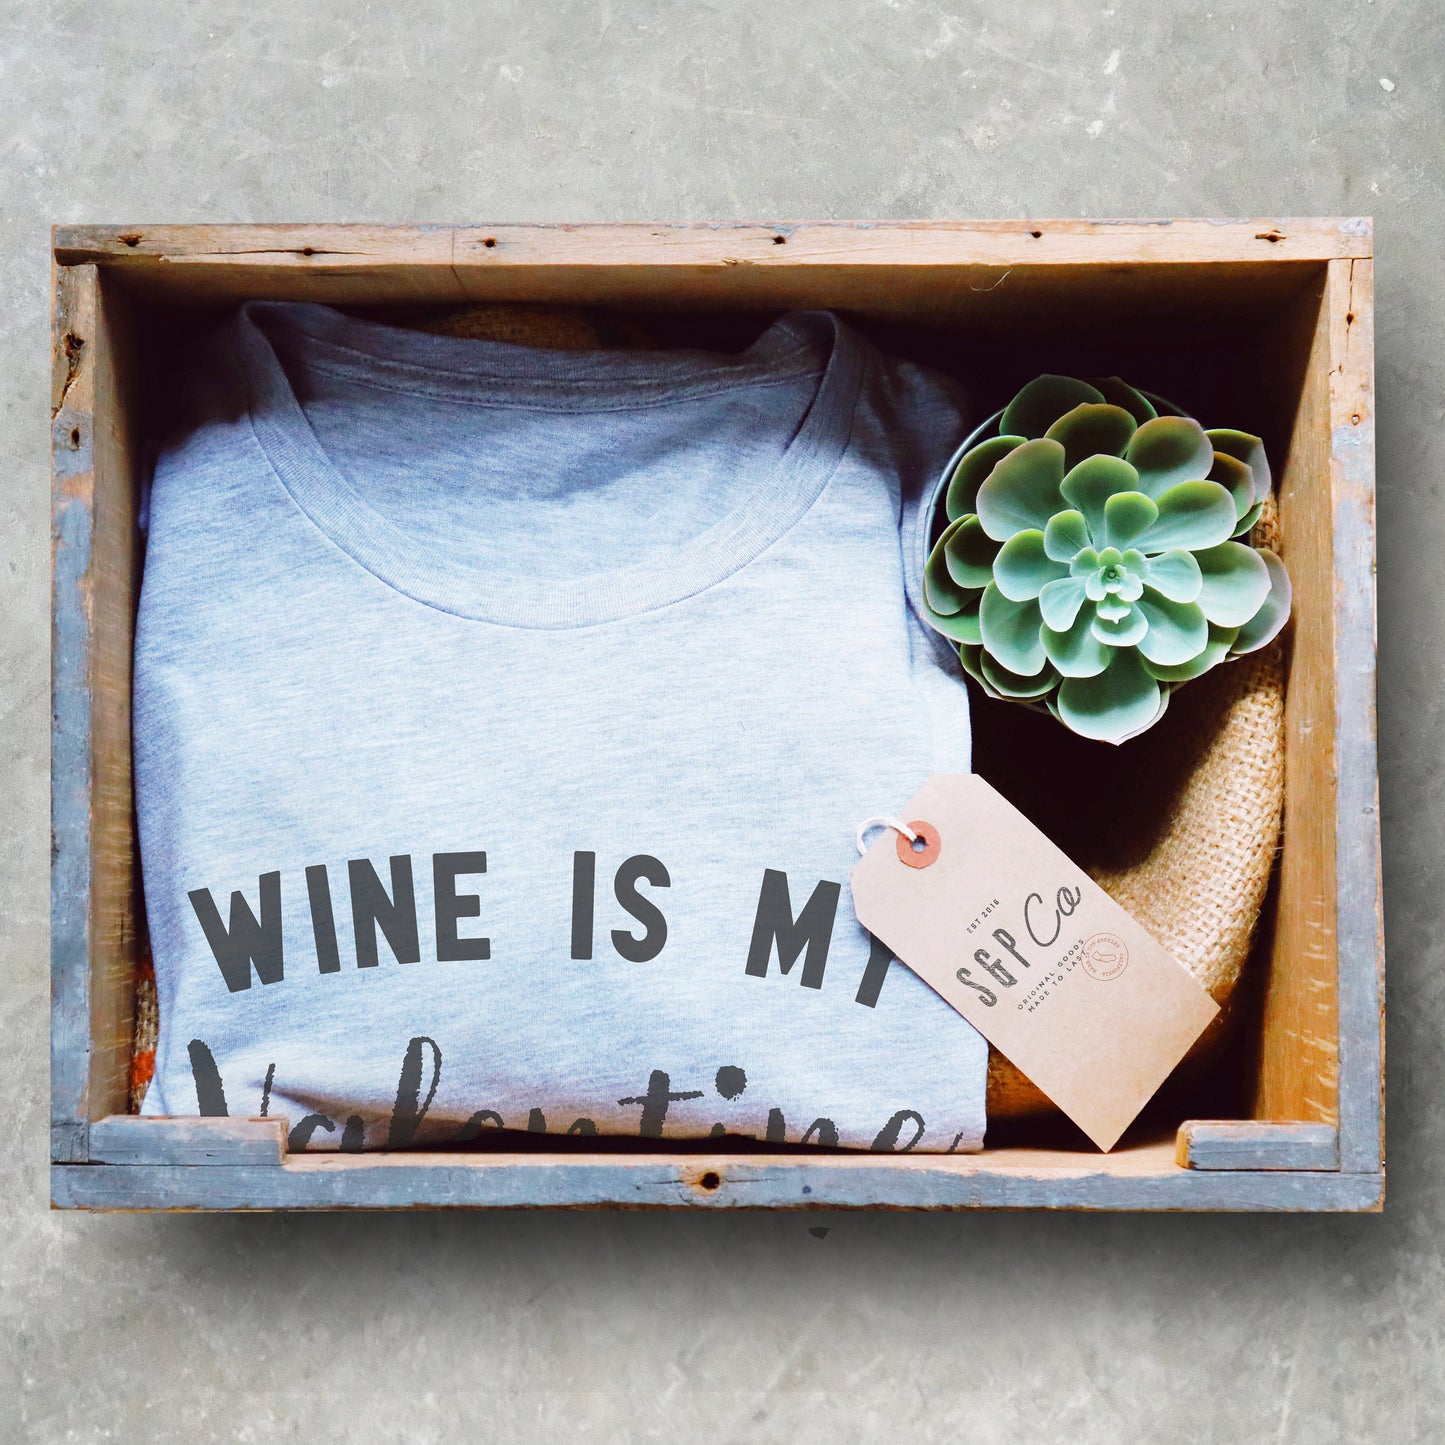 Wine Is My Valentine Unisex Shirt - Valentines day shirt, Valentines gift for coworker, Funny Valentine, Single woman shirt, Wine shirts